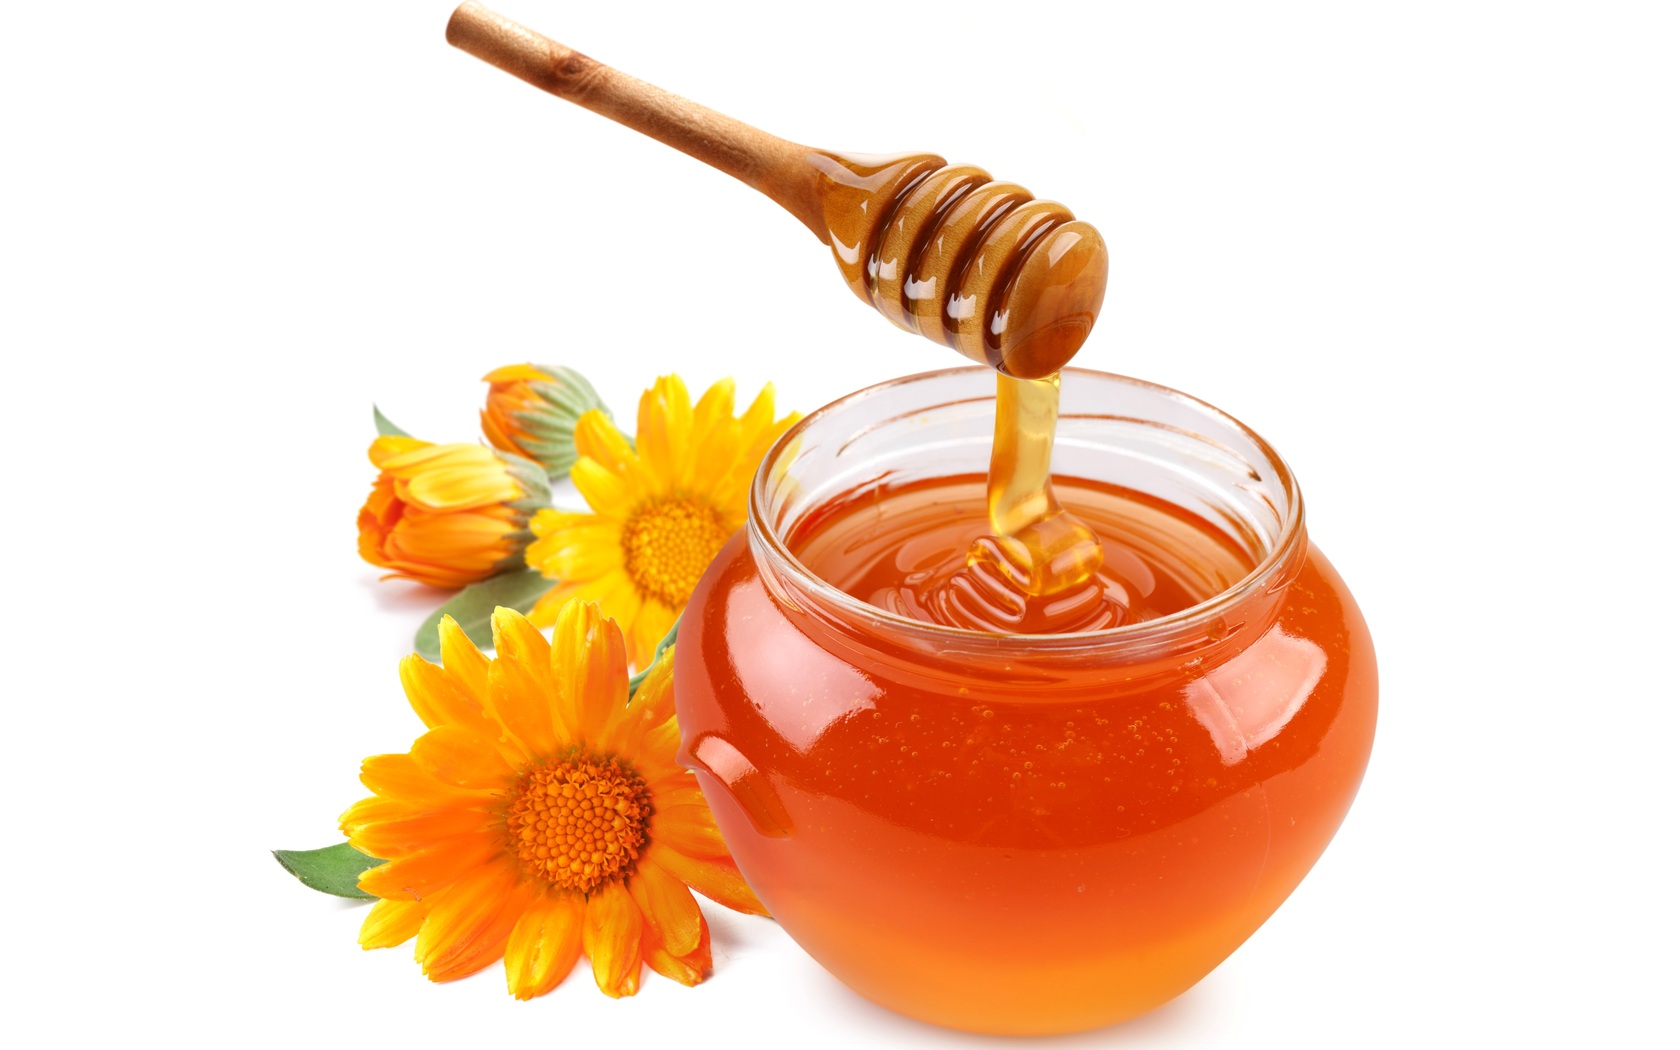 свойства мёда